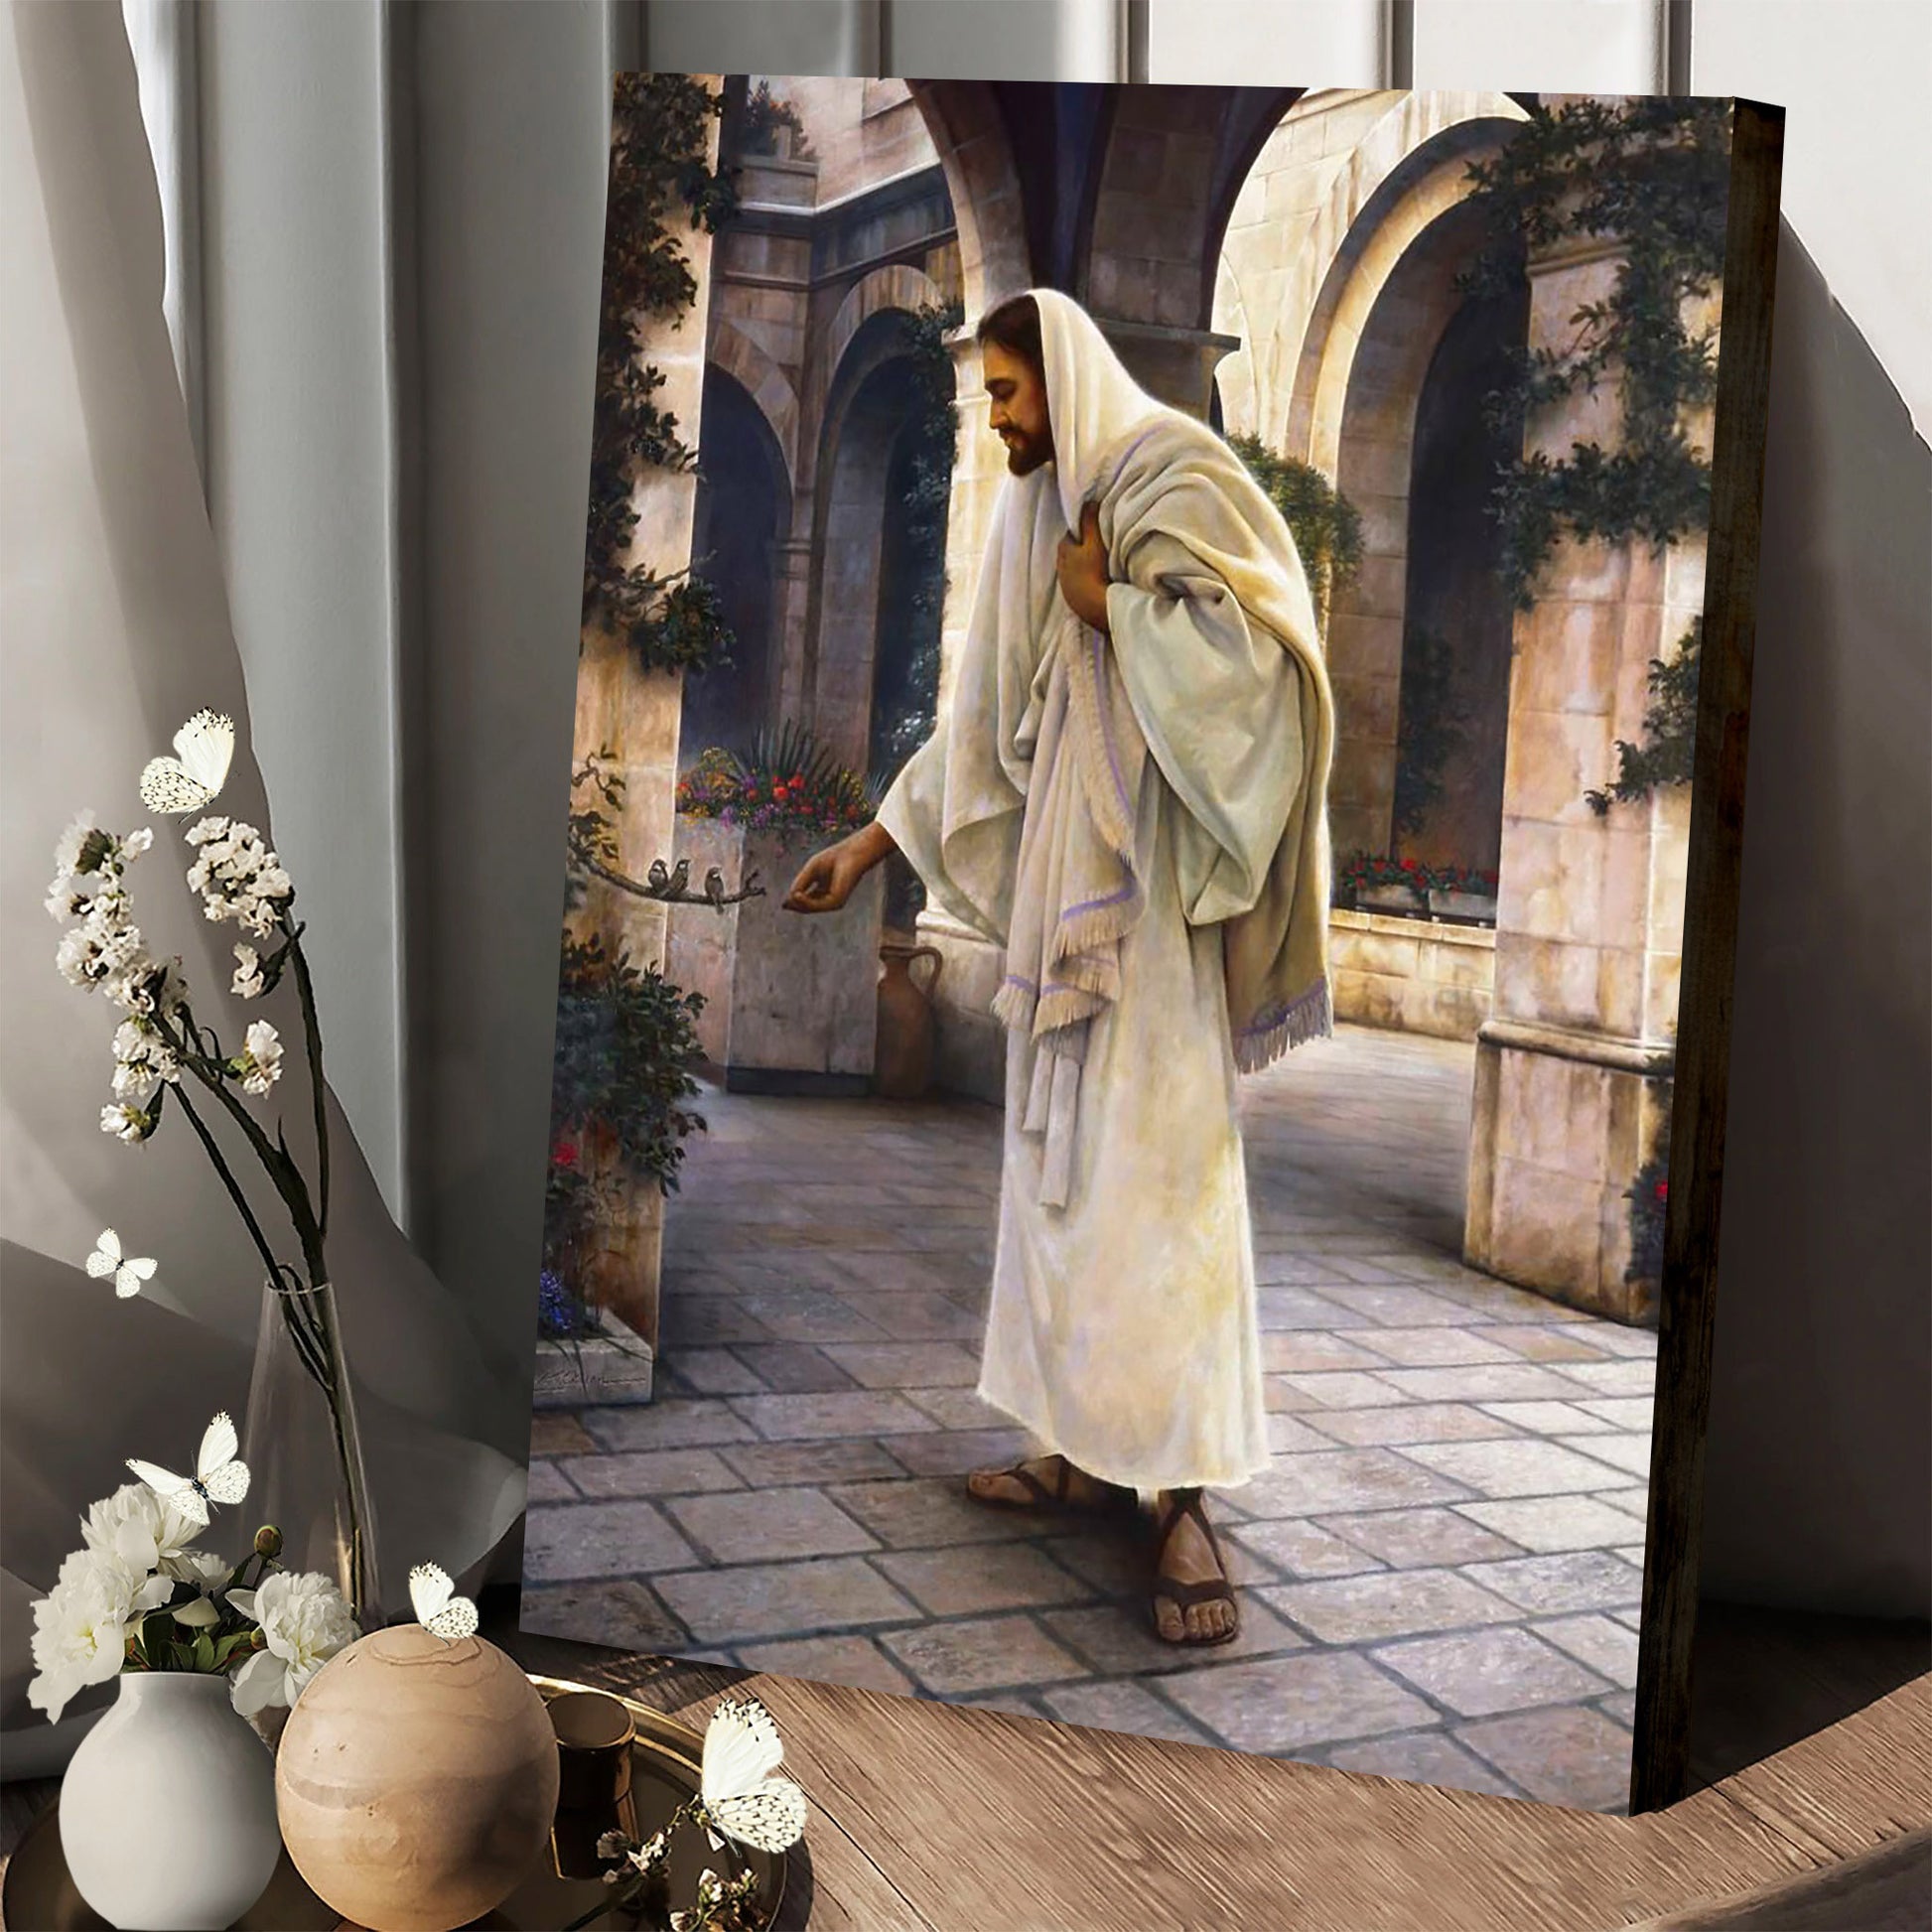 Jesus Christ Greg Olsen Canvas Picture - Jesus Christ Canvas Art - Christian Wall Canvas